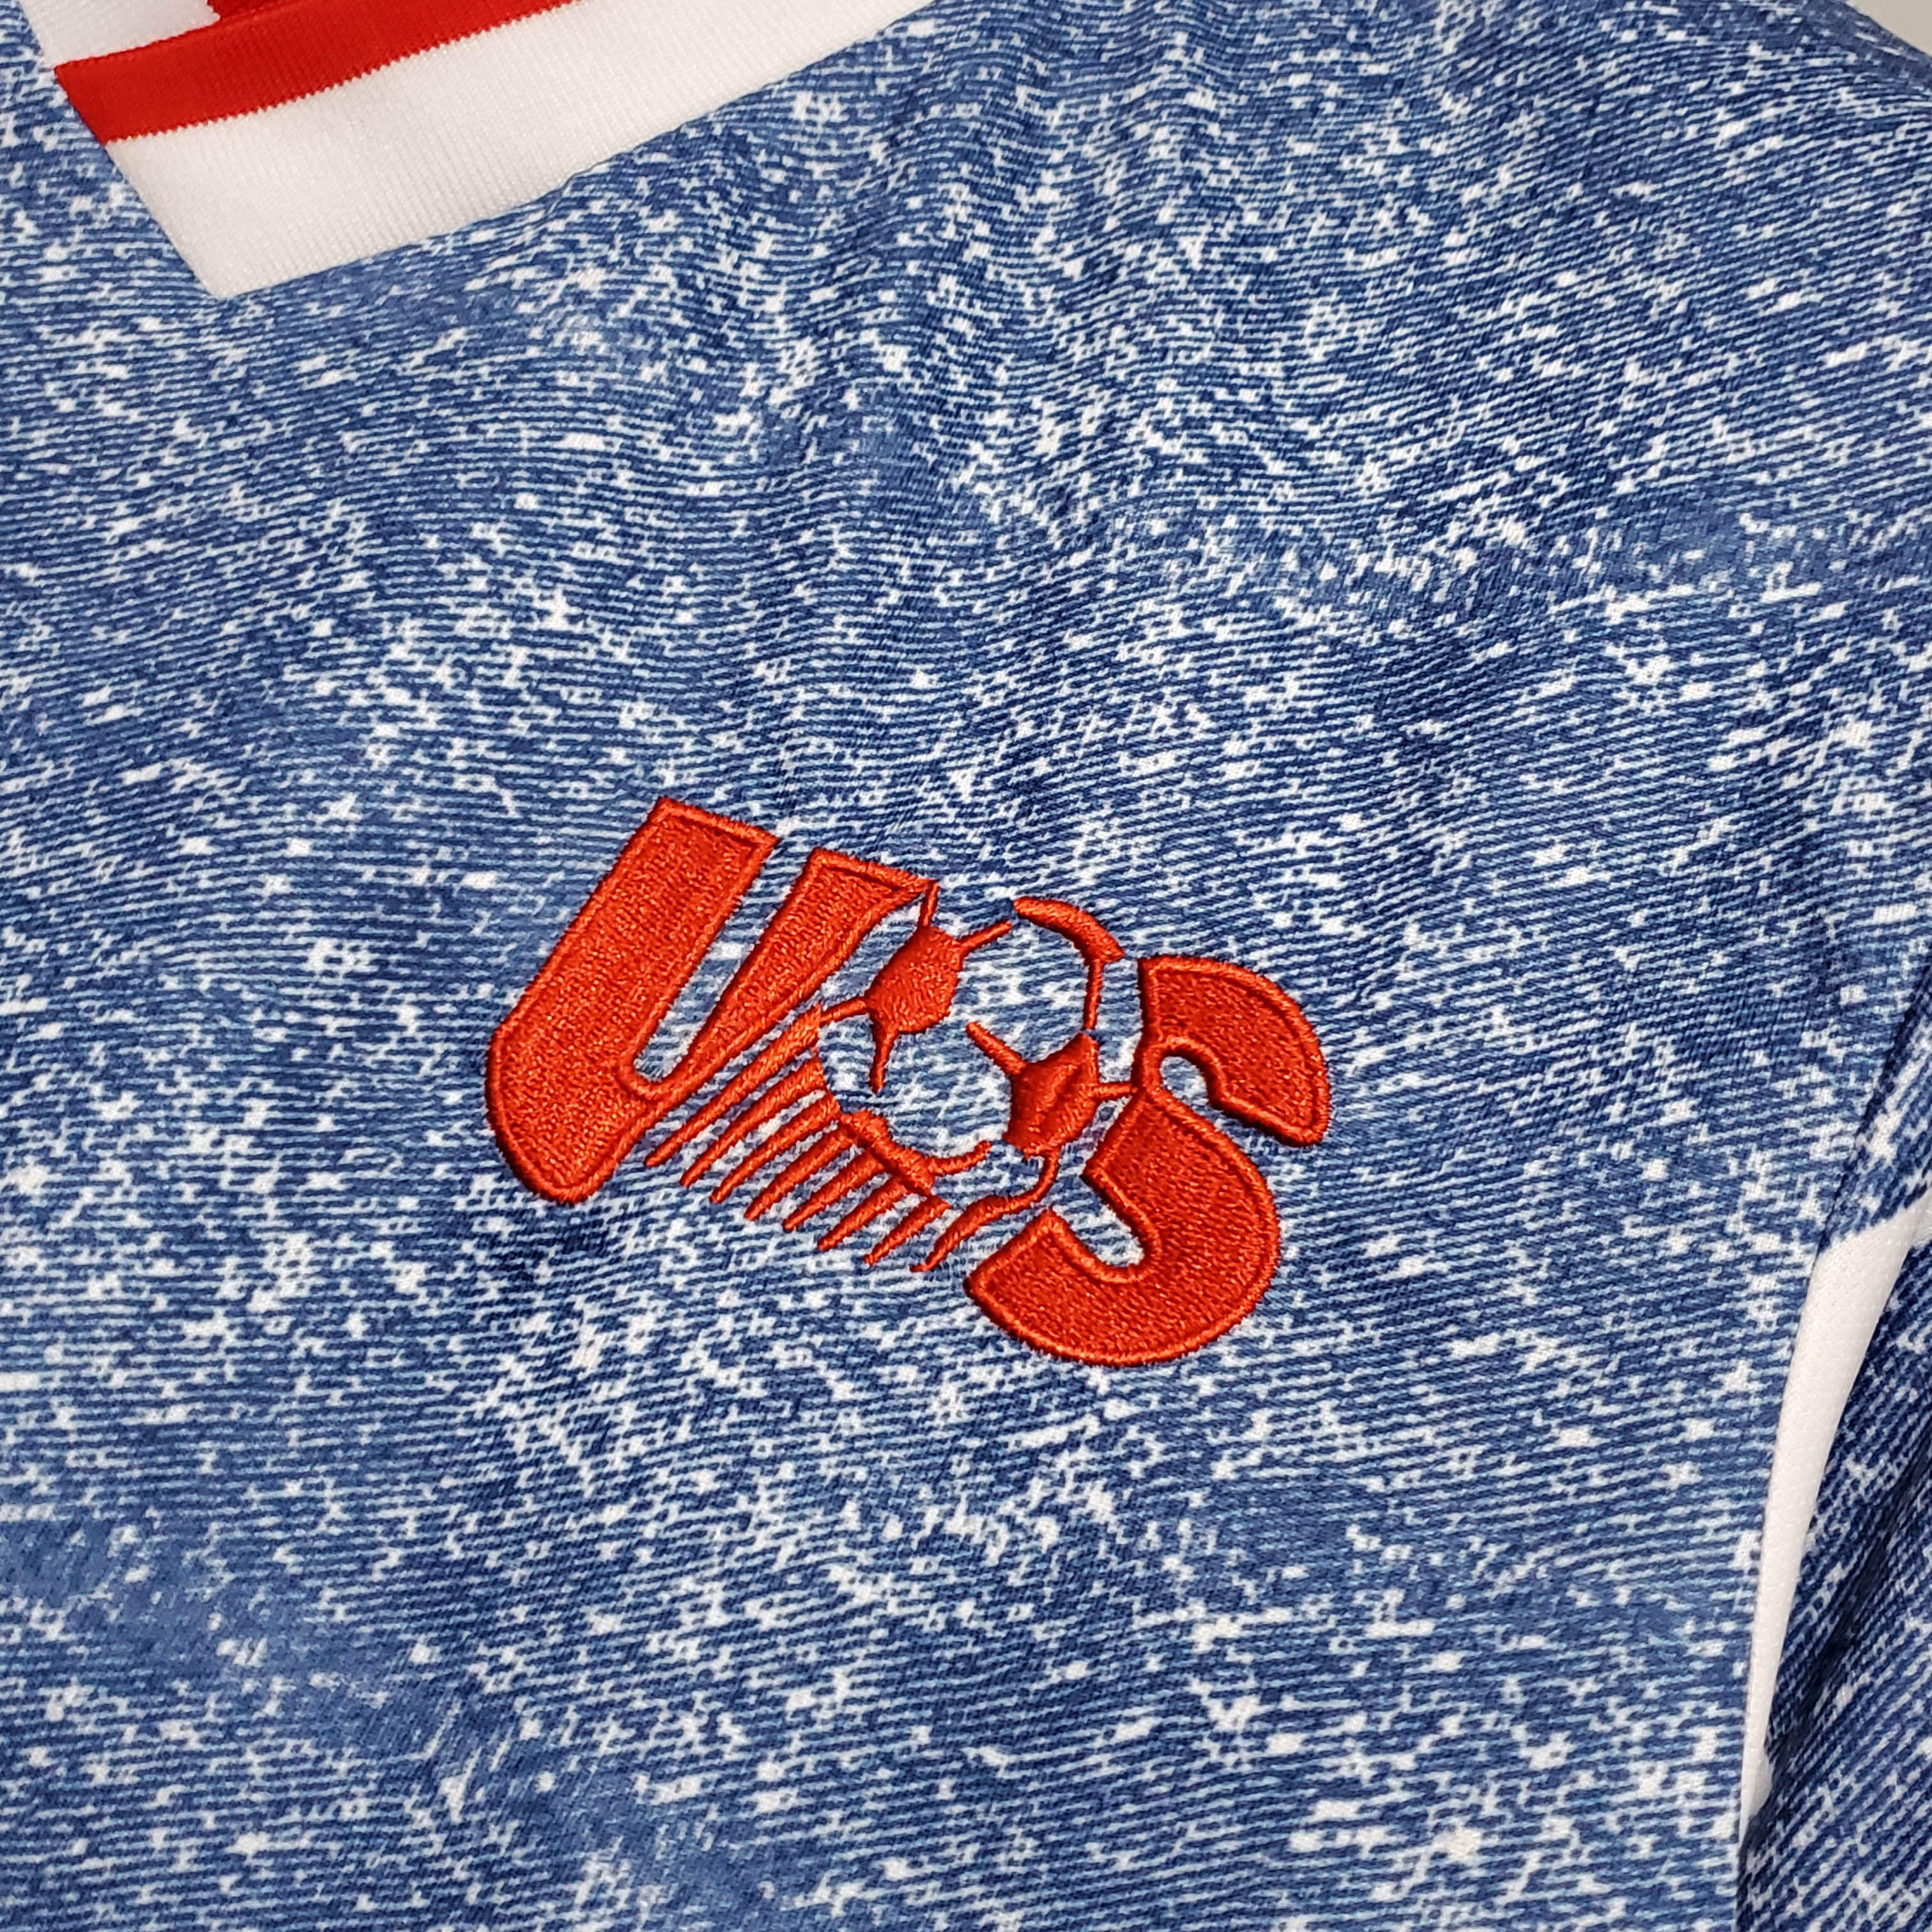 1994 USA Home Soccer Jersey Football Shirt Replica Reproduction *BNWT*